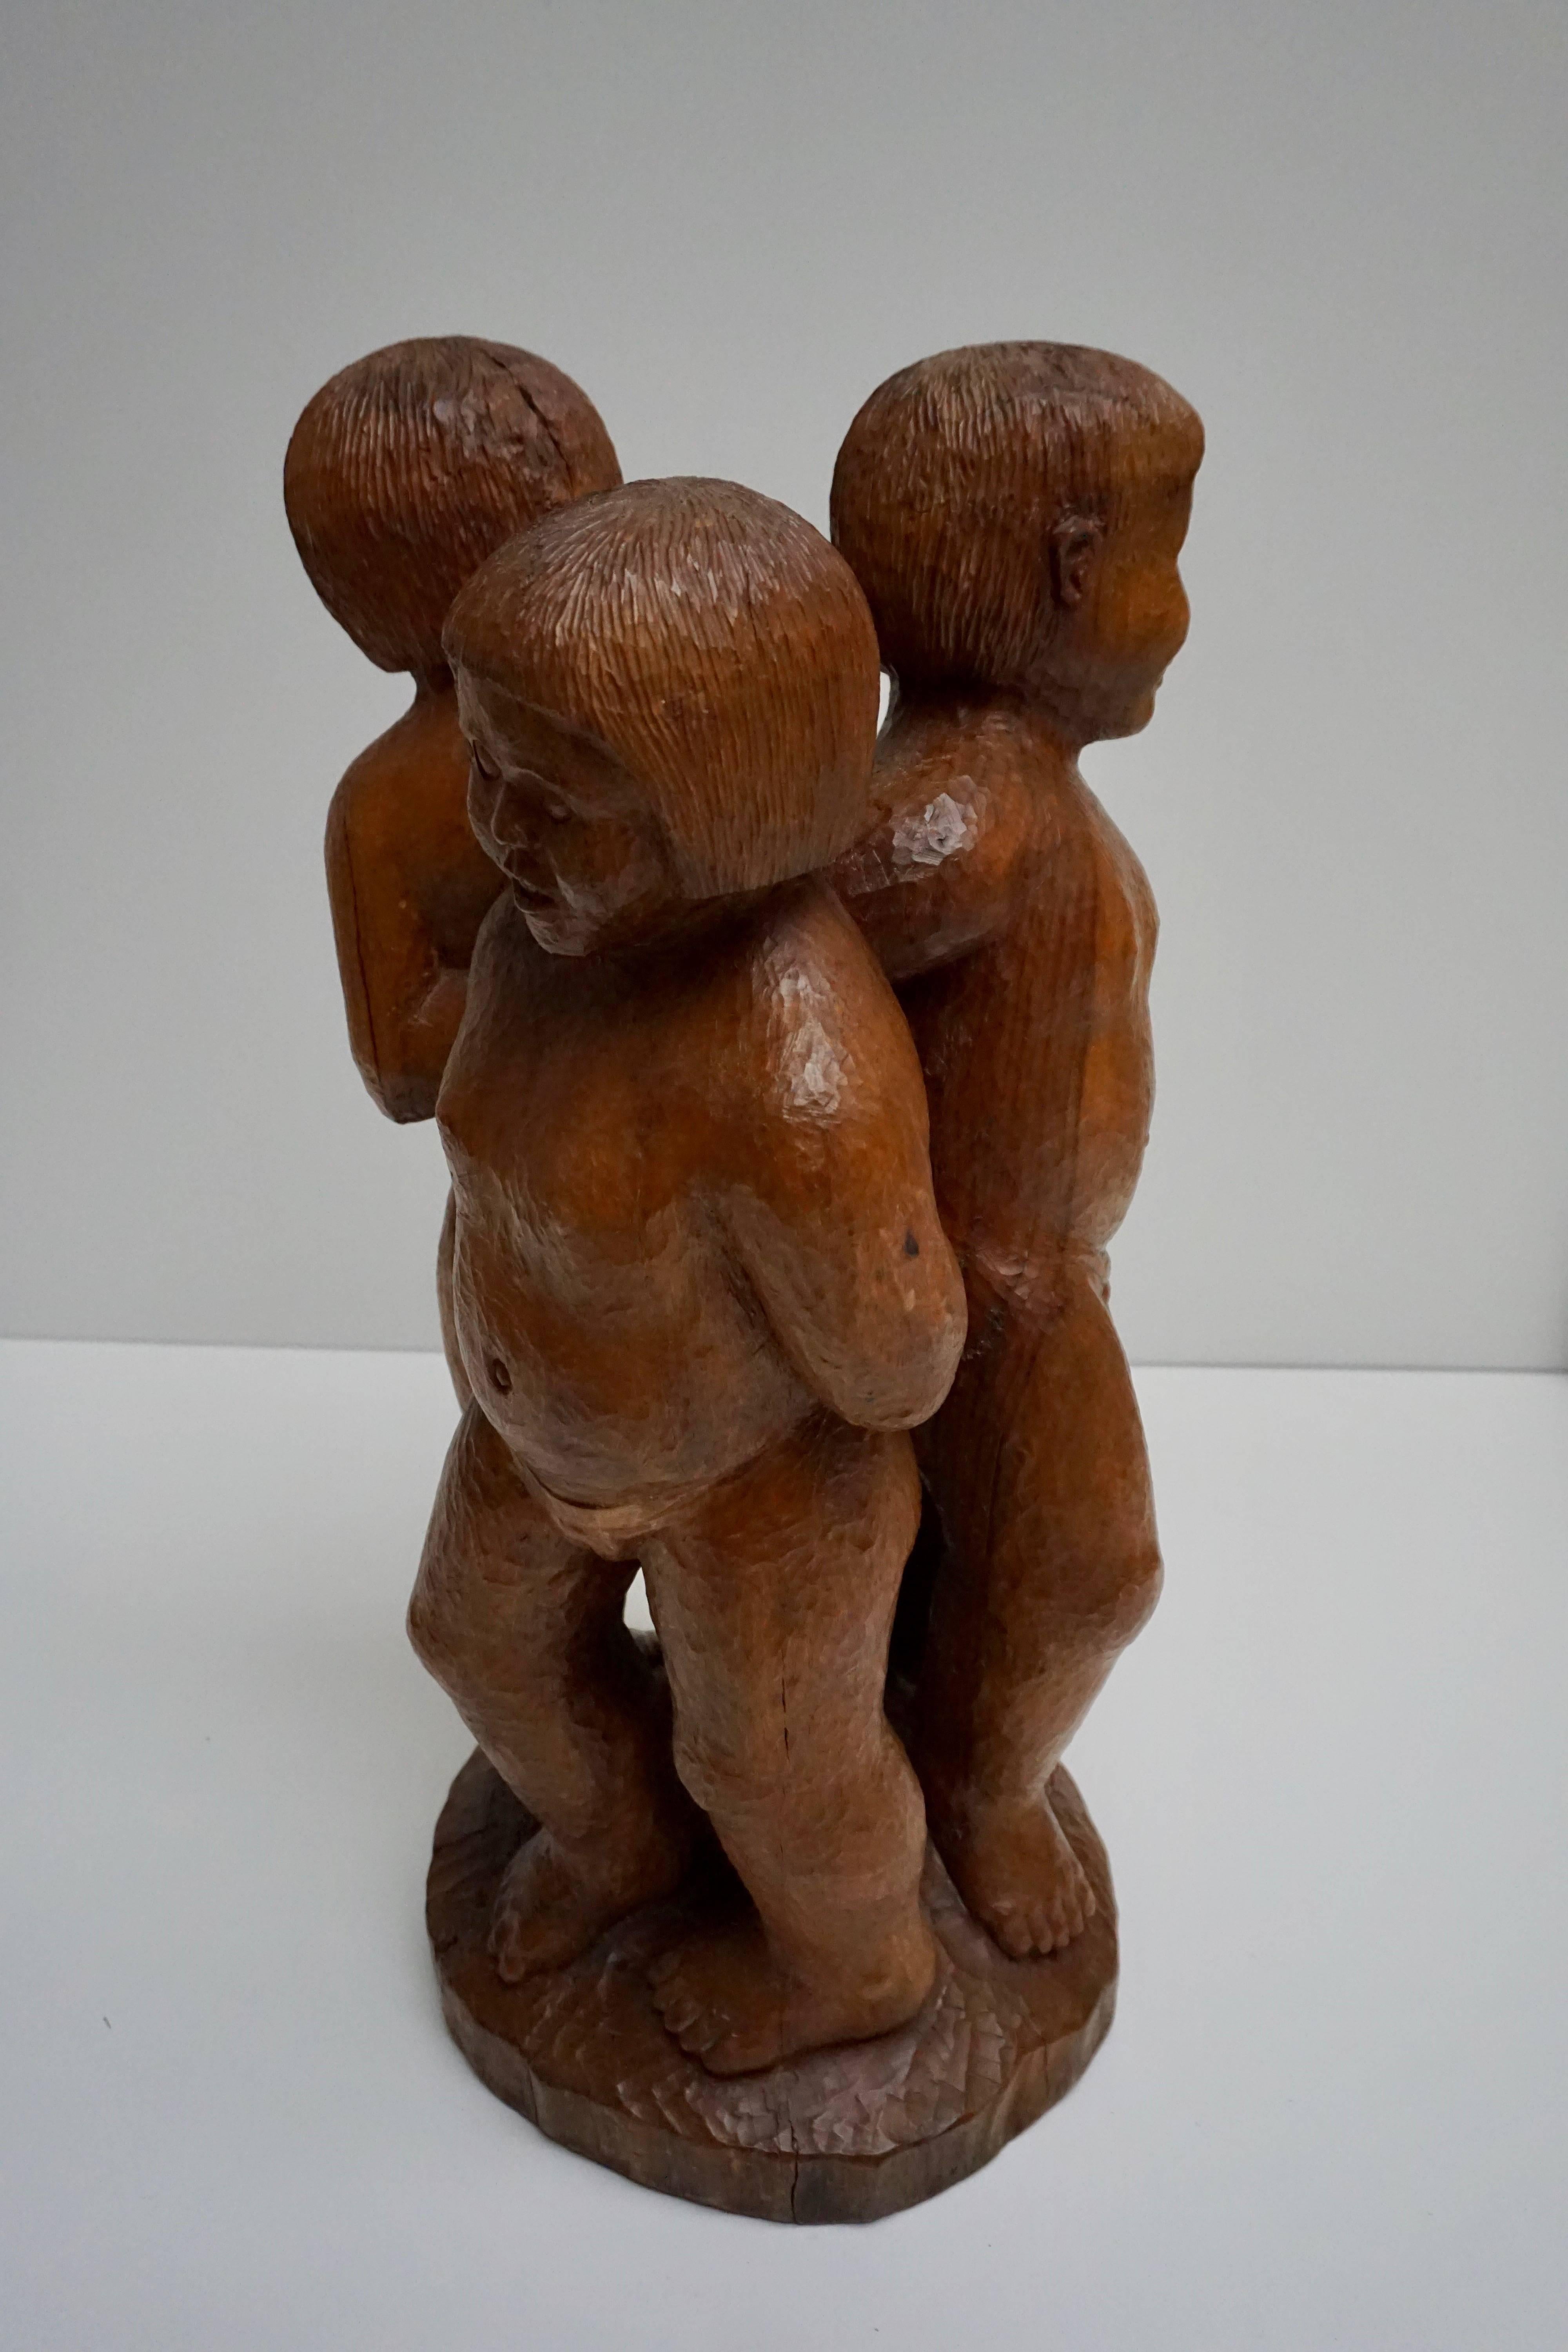 Wooden sculpture of three naked children, signed A Dendooven 1990, Belgium.
Measures: Height 66 cm.
Diameter 32 cm.
Weight 12 kg.